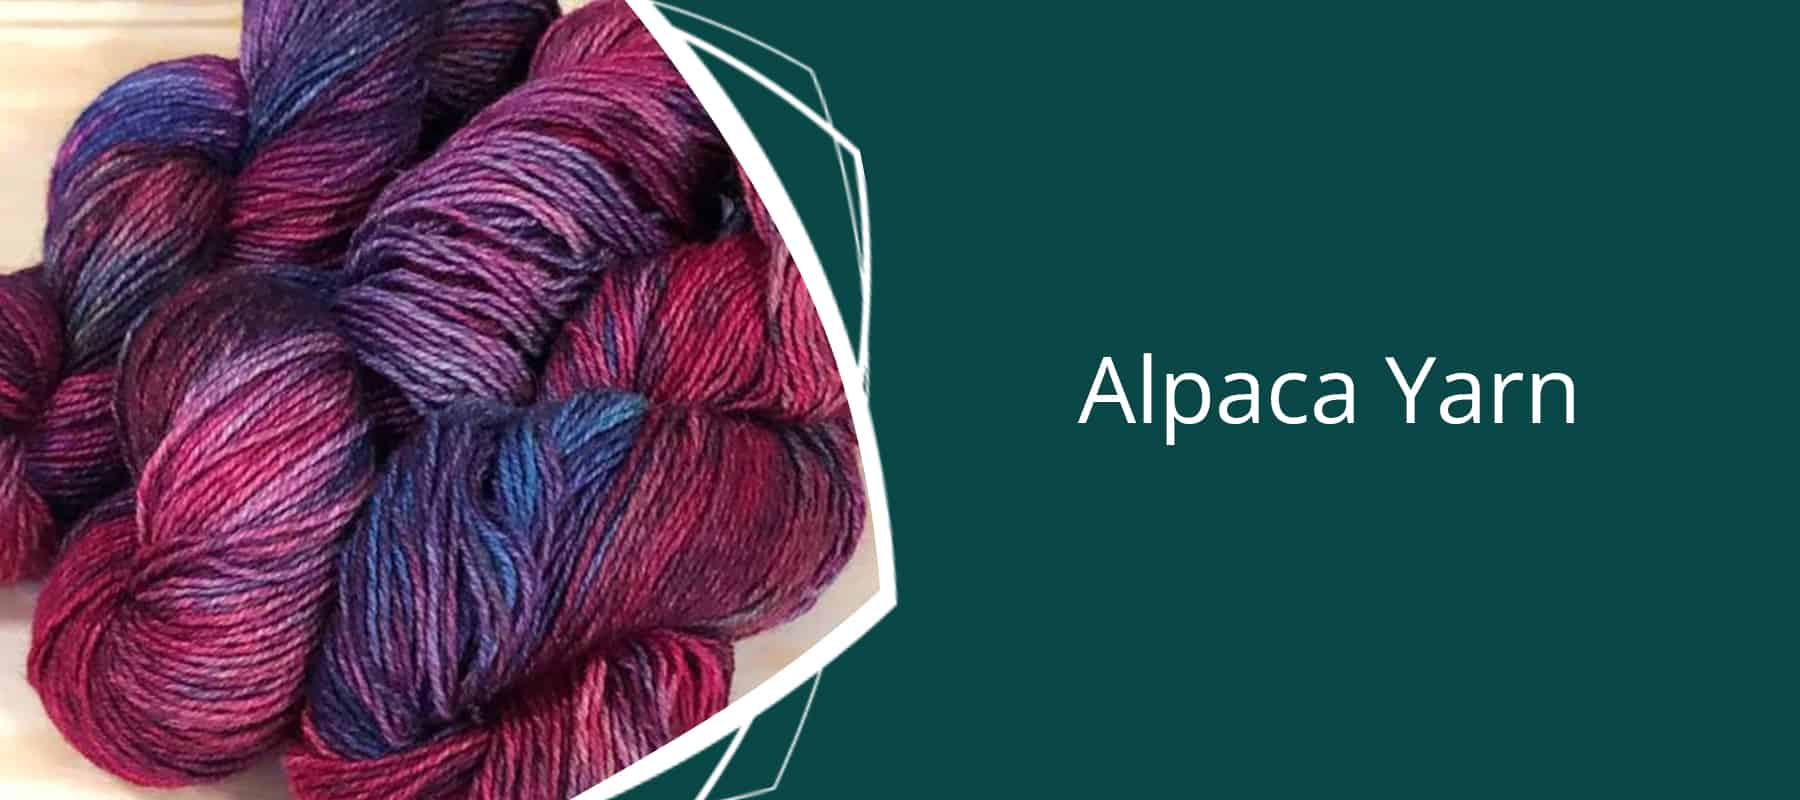 Alpaca Yarn Australia: Knitting & Weaving Handicraft Art - Thread Collective Australia 